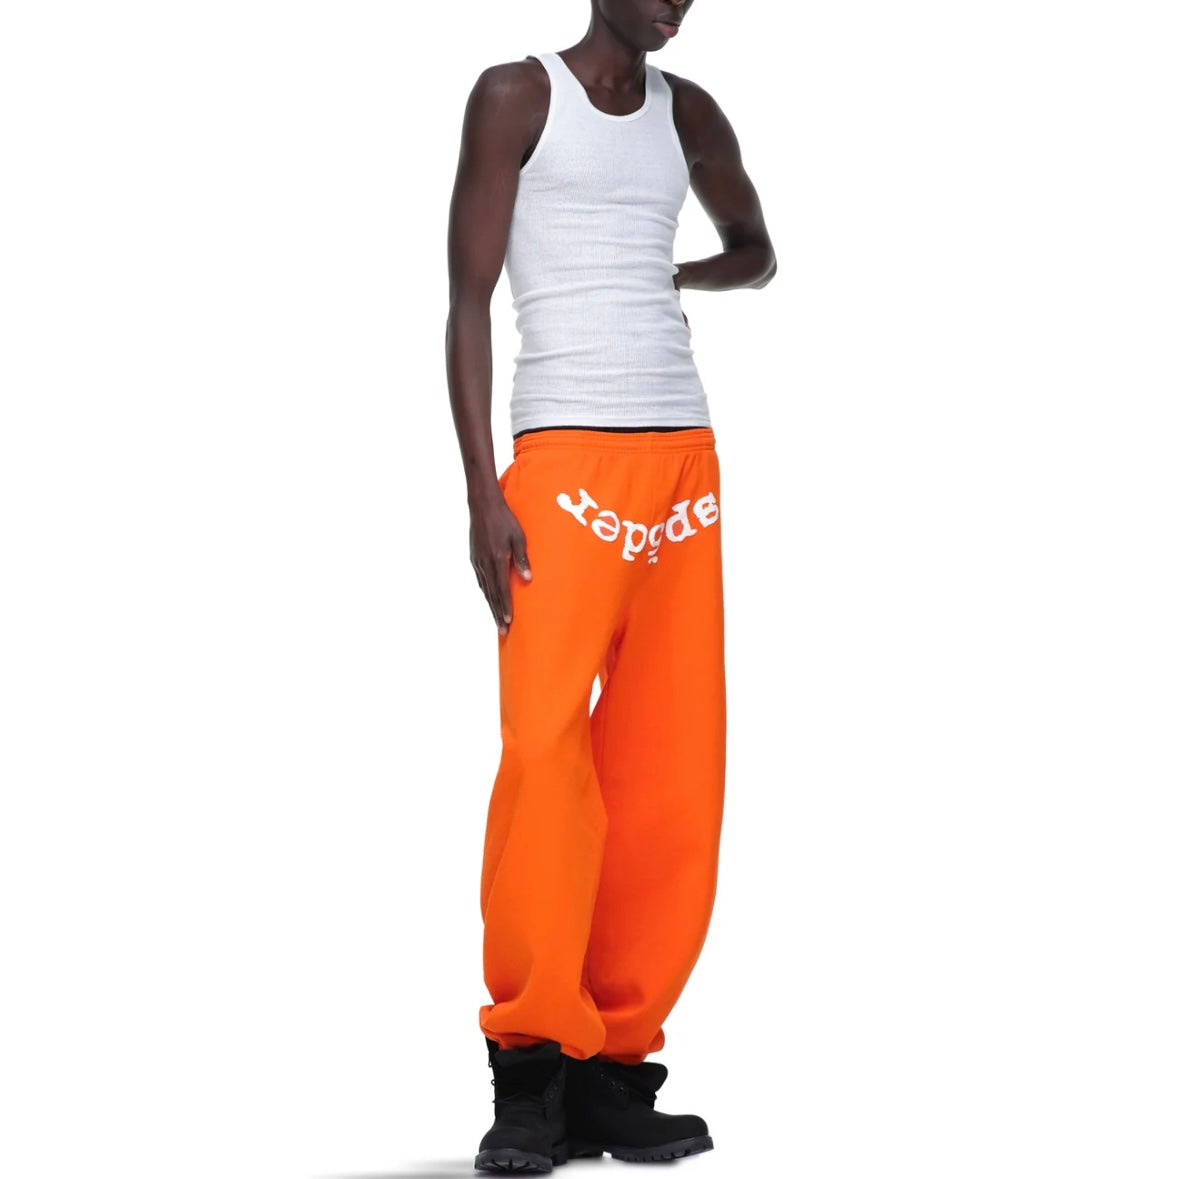 Sp5der Orange White Legacy Sweatpants On Body Front